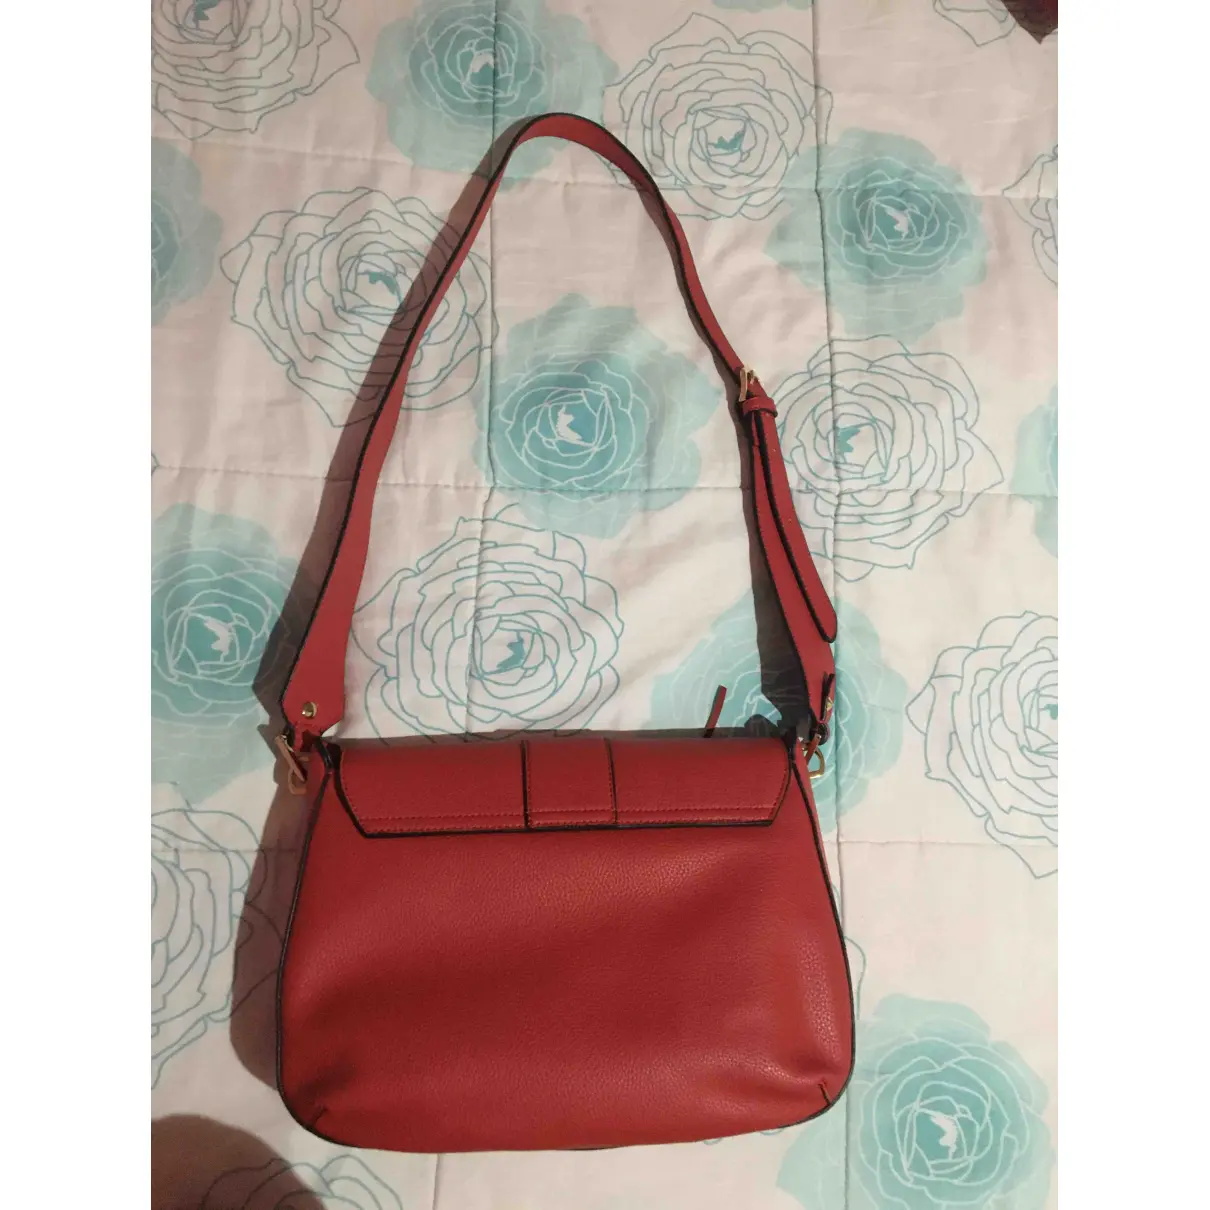 Buy Liu.Jo Leather handbag online